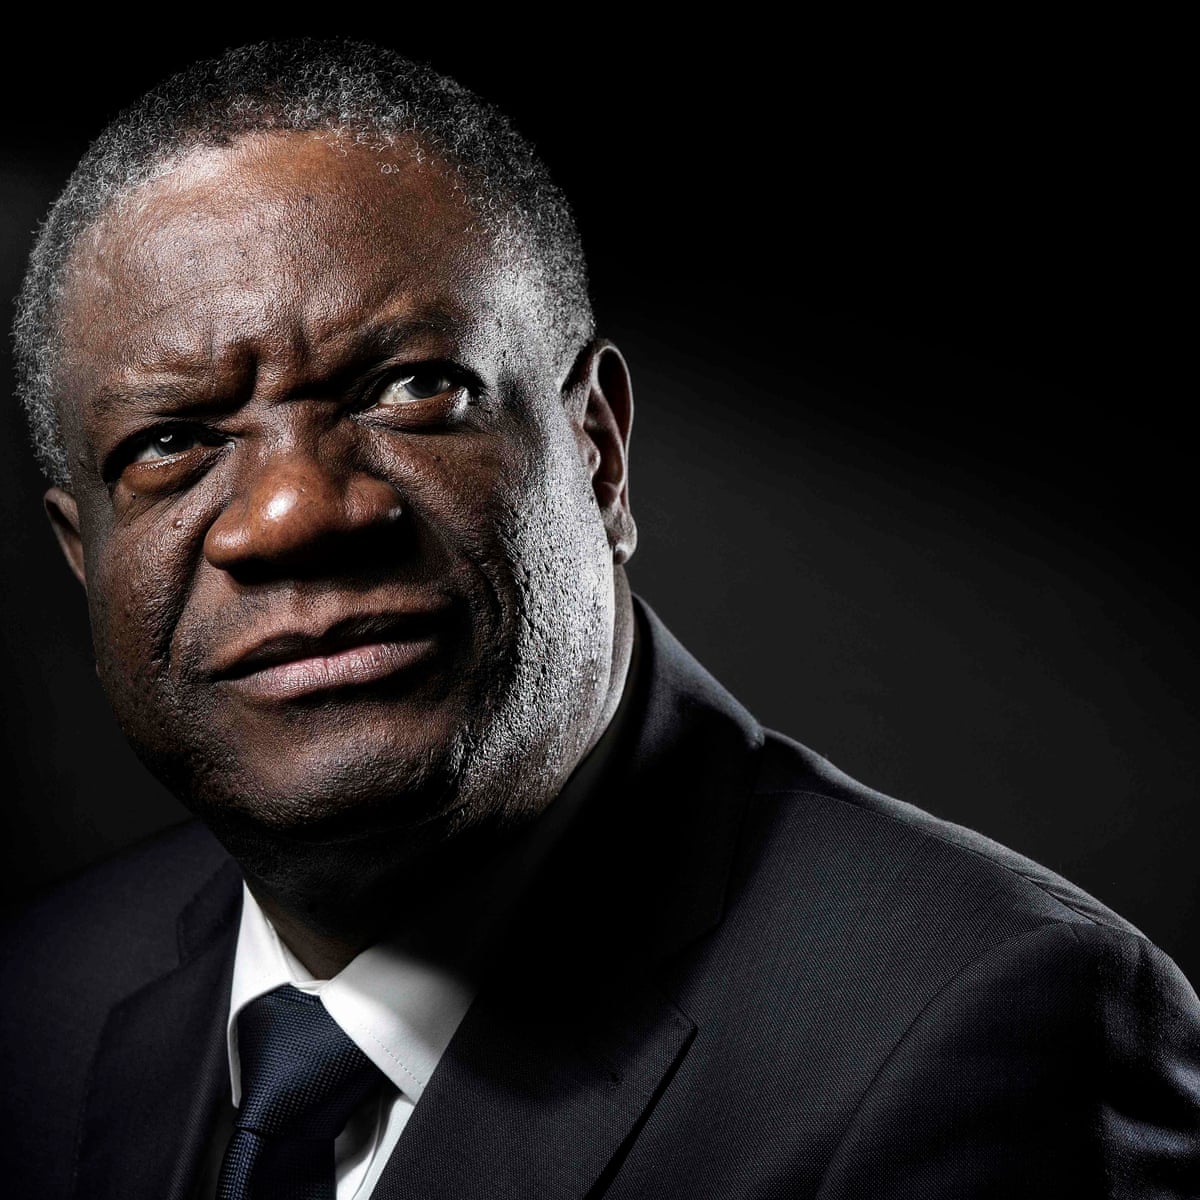 We have few heroes in this world. Denis Mukwege is one | Eve Ensler | The Guardian